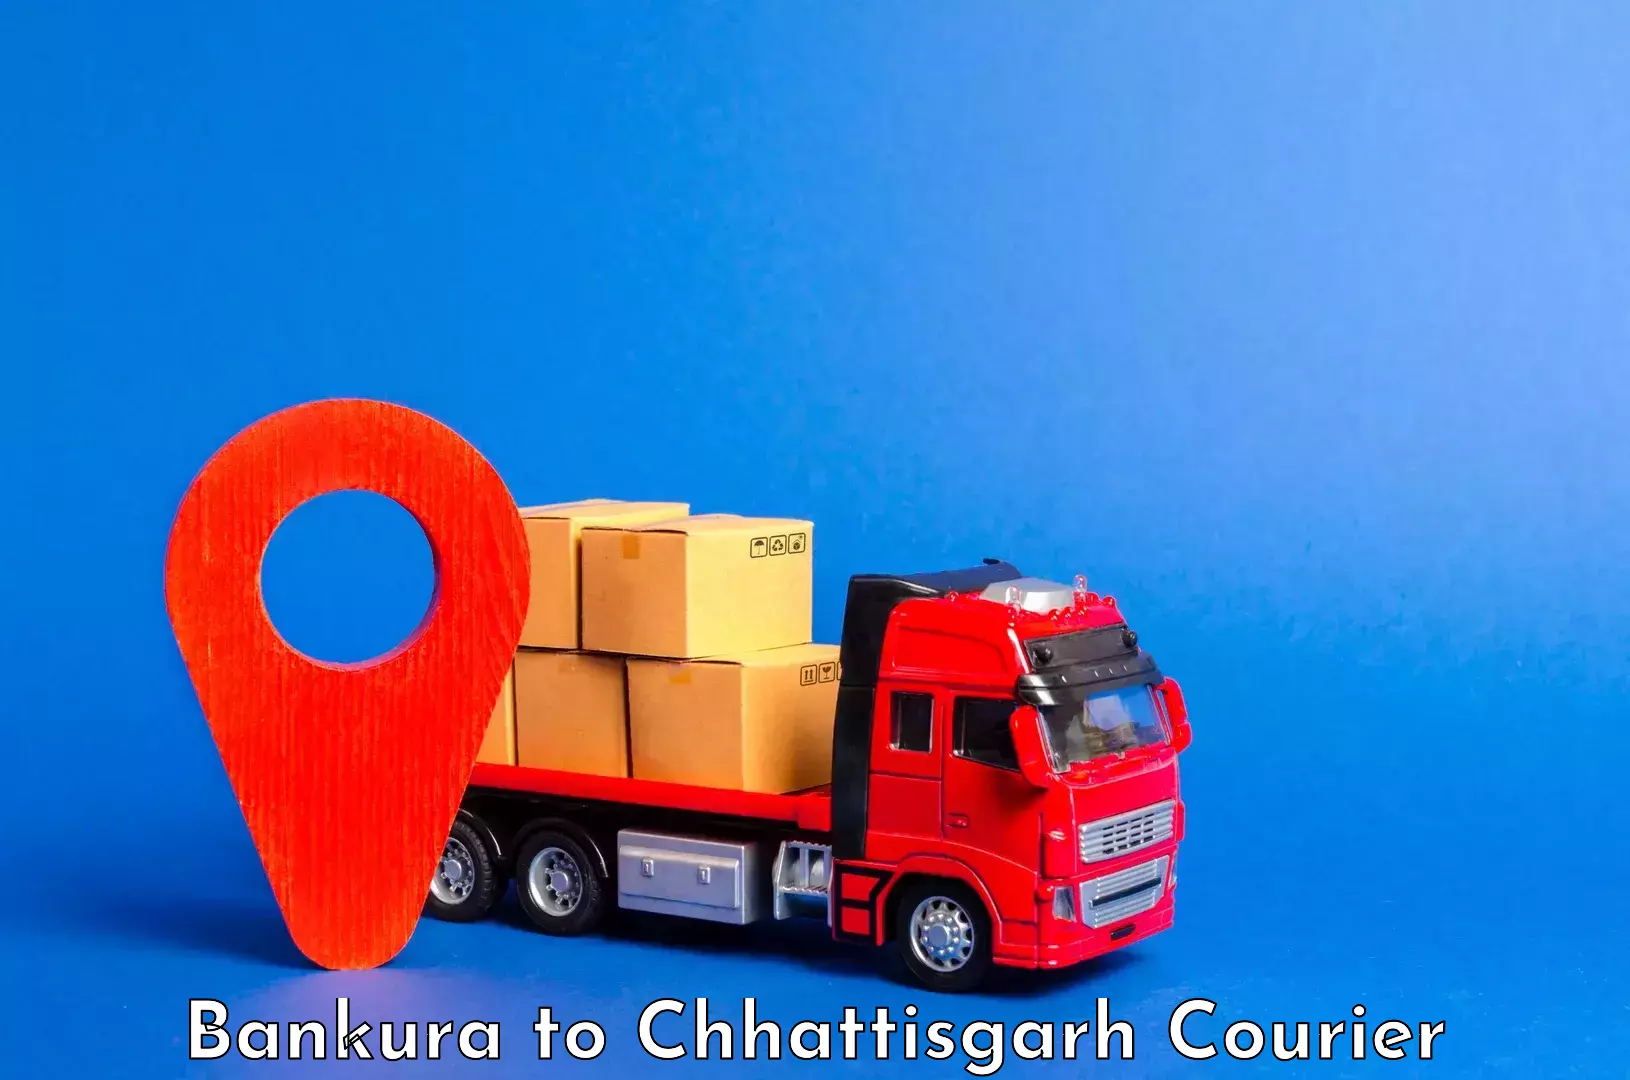 Same day luggage service Bankura to Chhattisgarh